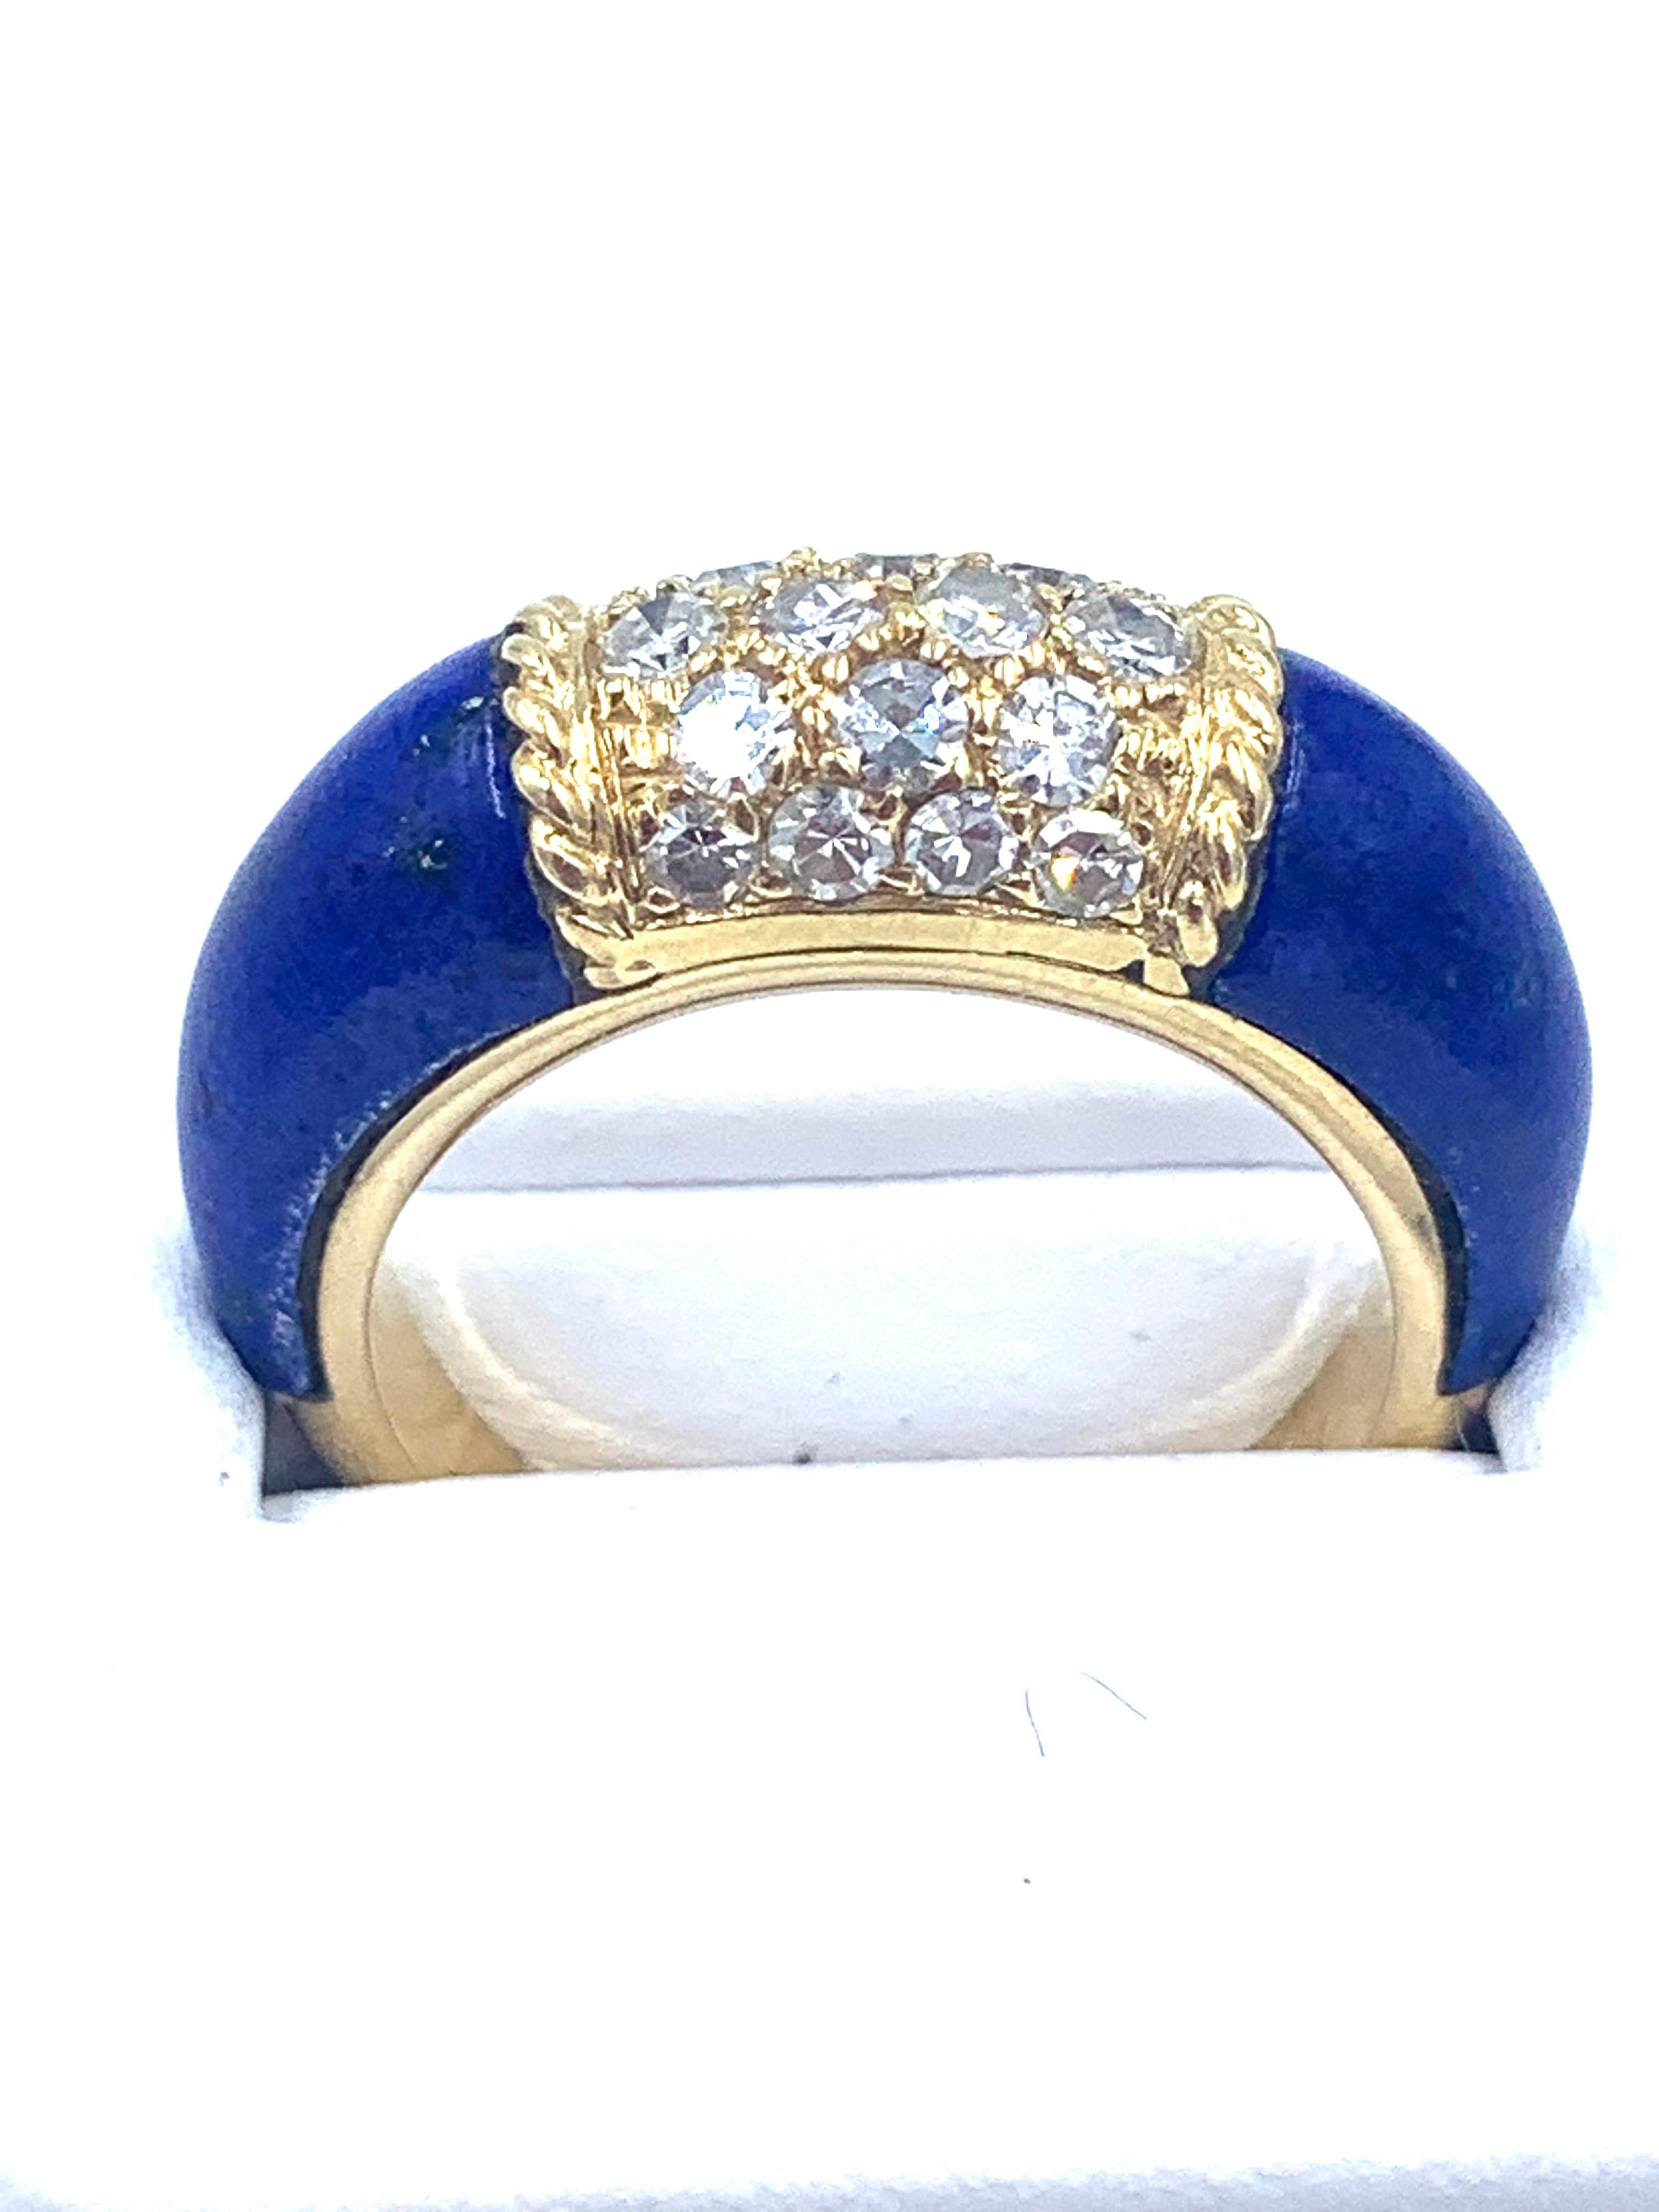 Van Cleef & Arpels Blue Lapis and Diamond Ring in 18 Karat Yellow Gold 1